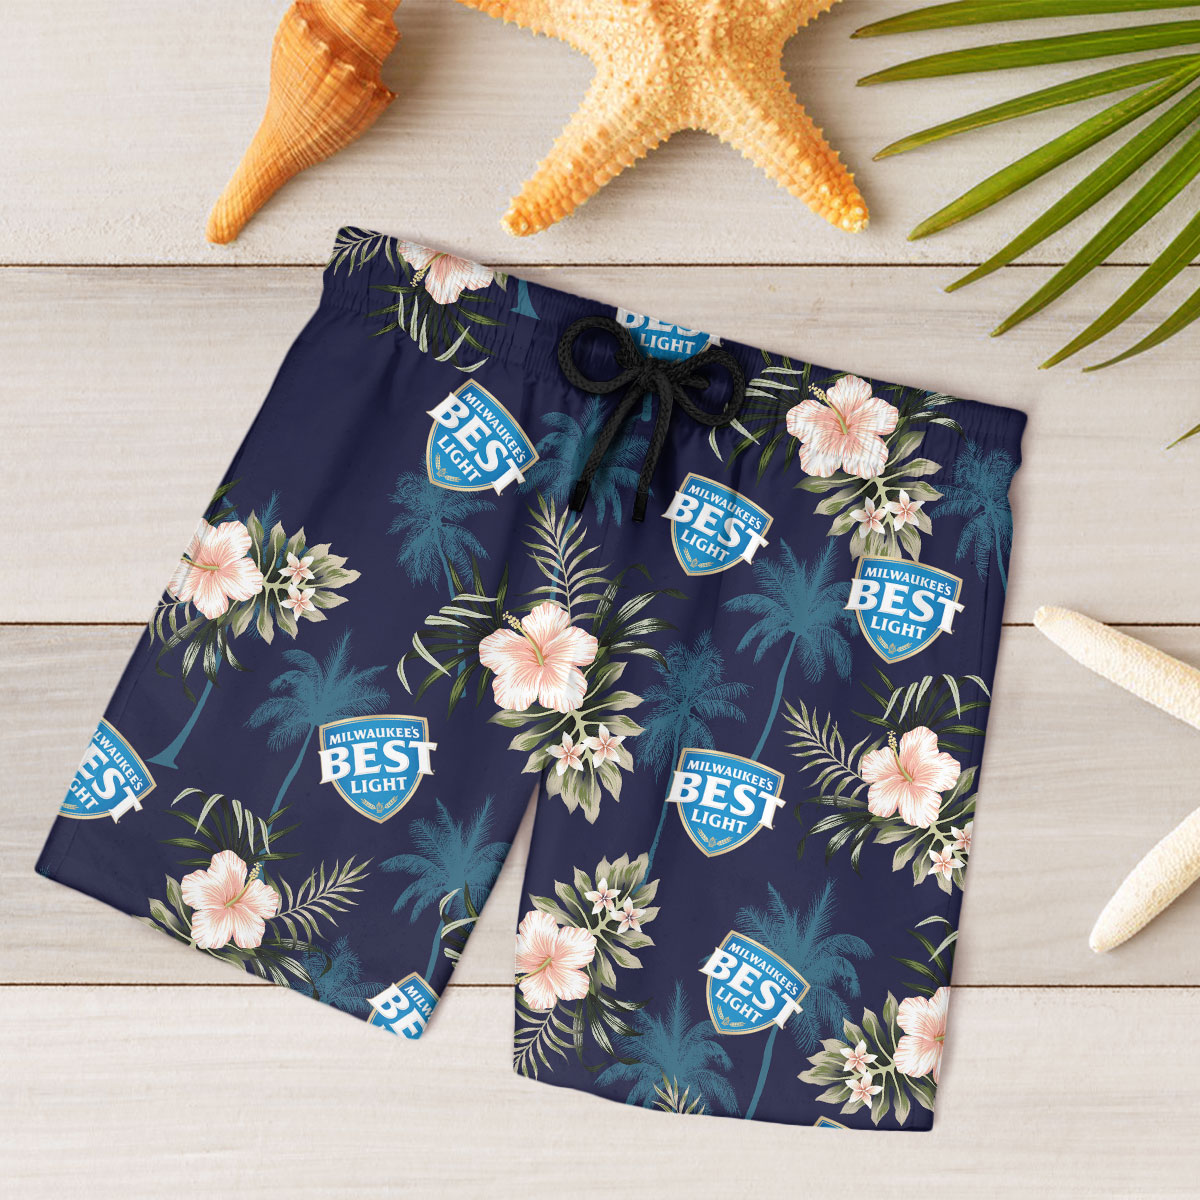 Milwaukee Brewers Limited Edition Hawaiian Shirt And Shorts Best Beach  Summer Sets - Freedomdesign